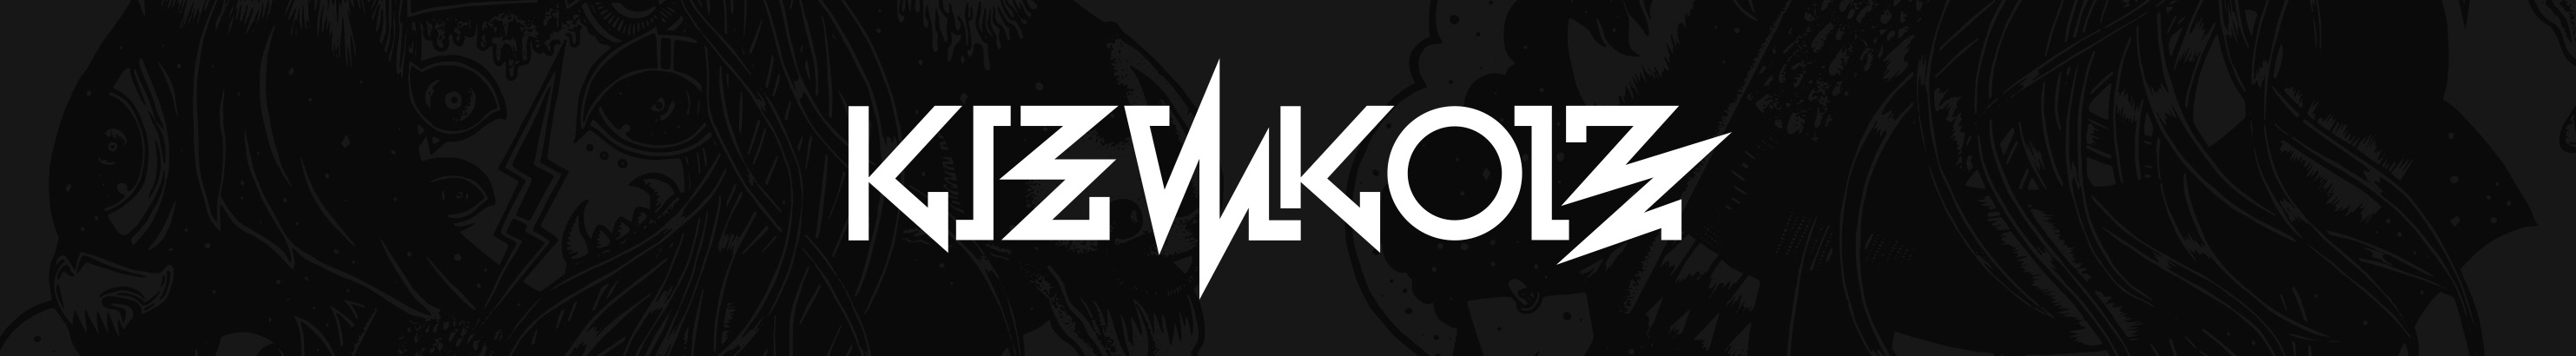 KIEW KOIZ's profile banner